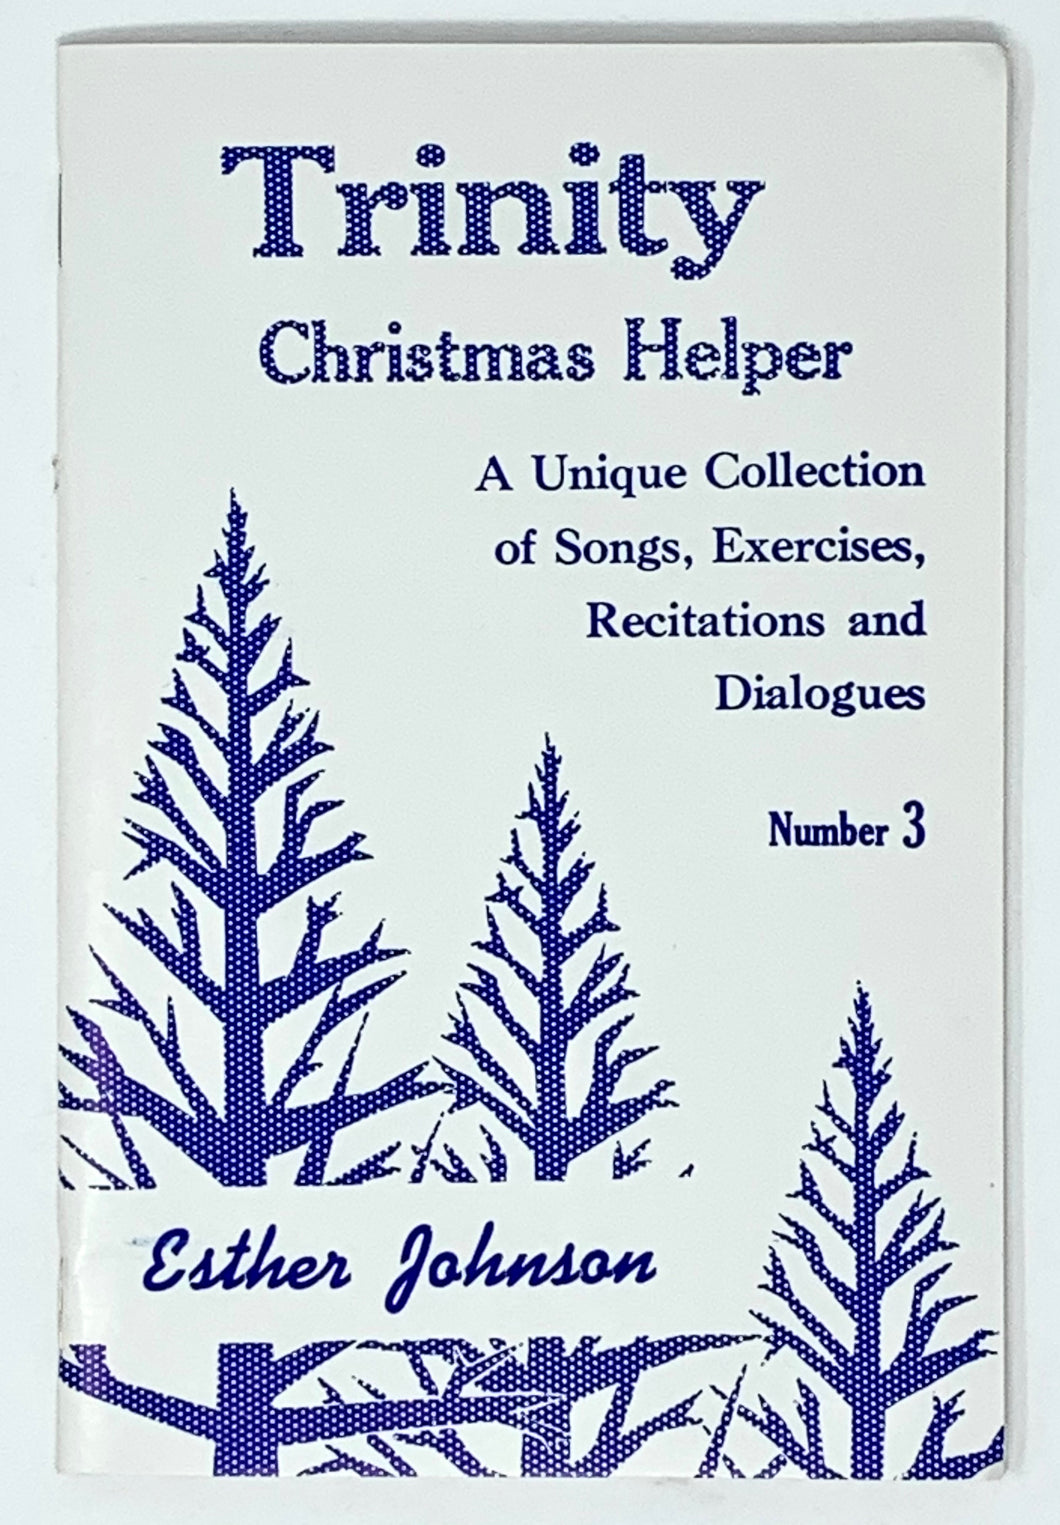 60127 - TRINITY CHRISTMAS HELPER #3